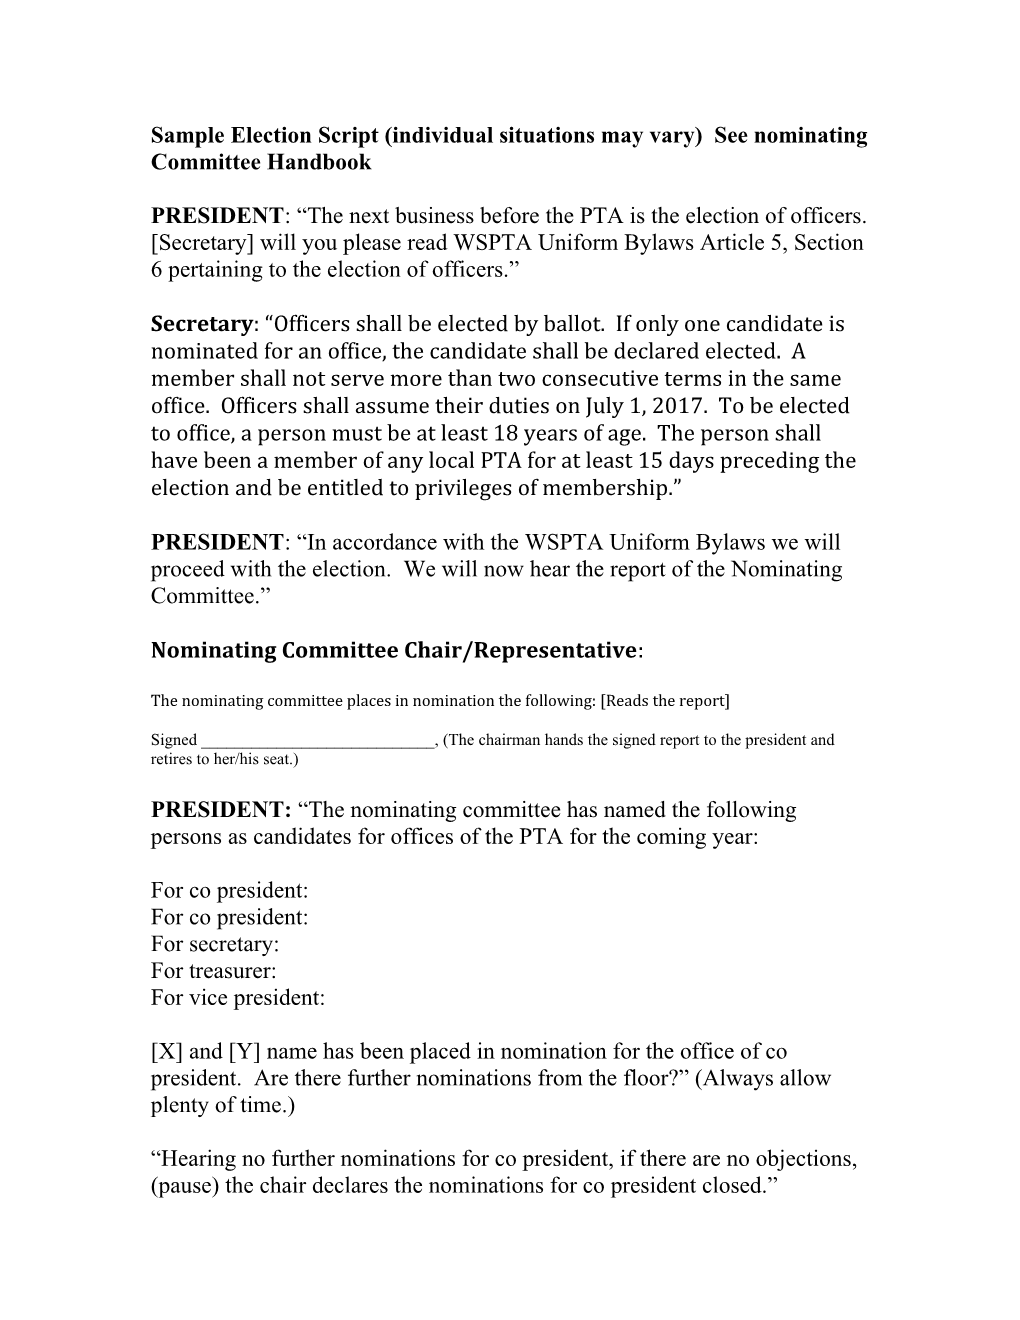 Sample Election Script (Individual Situations May Vary) See Nominating Committee Handbook